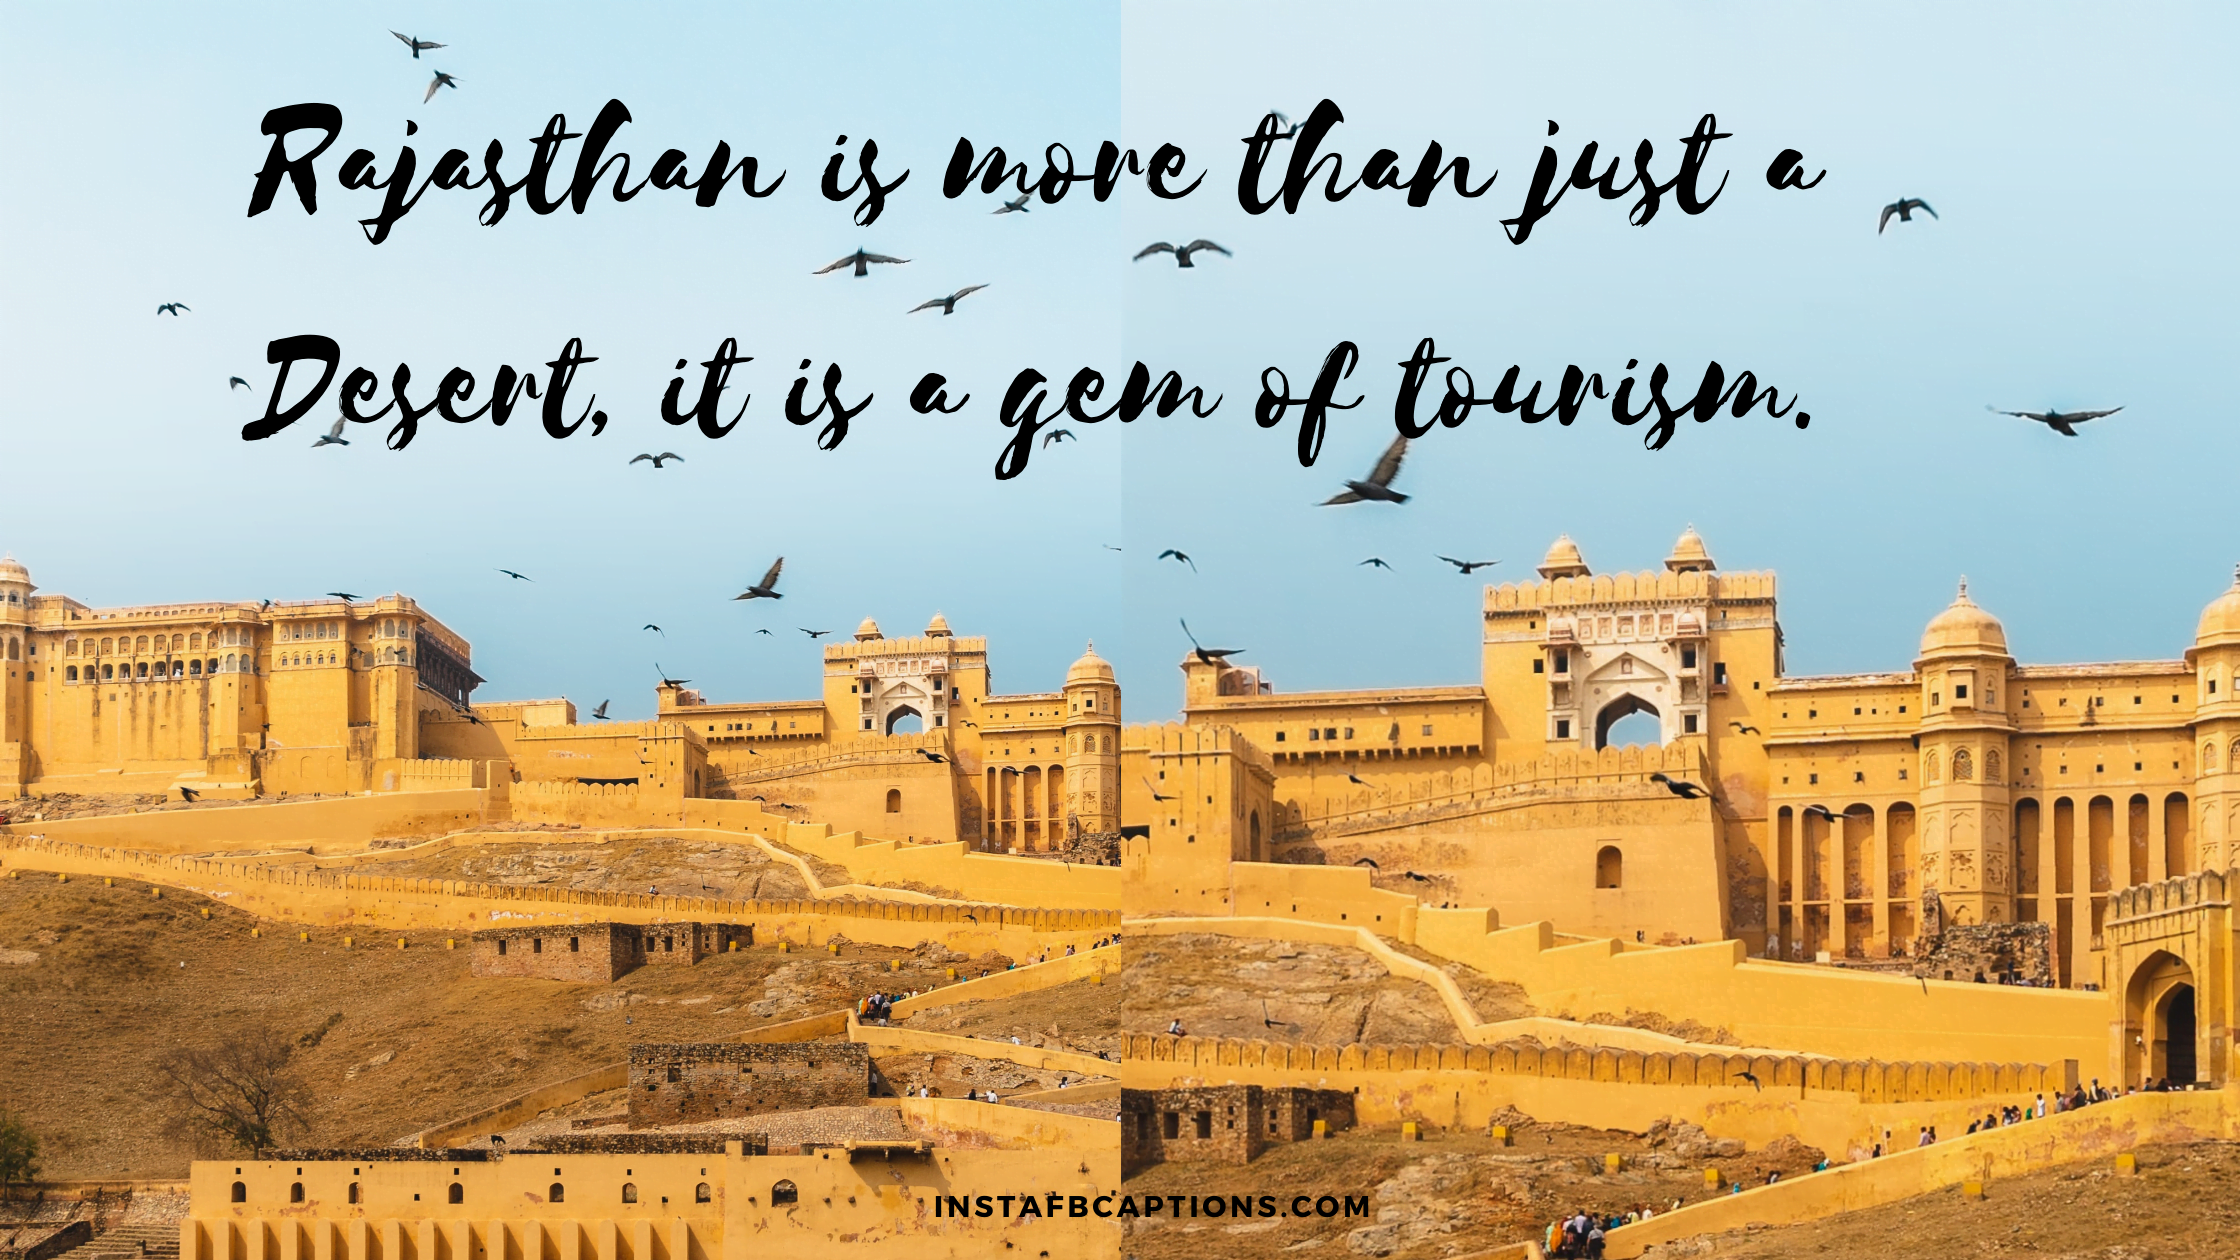 Royal Jaisalmer Desert Captions  - Royal Jaisalmer Desert Captions - 92 Desert Instagram Captions Quotes in 2022